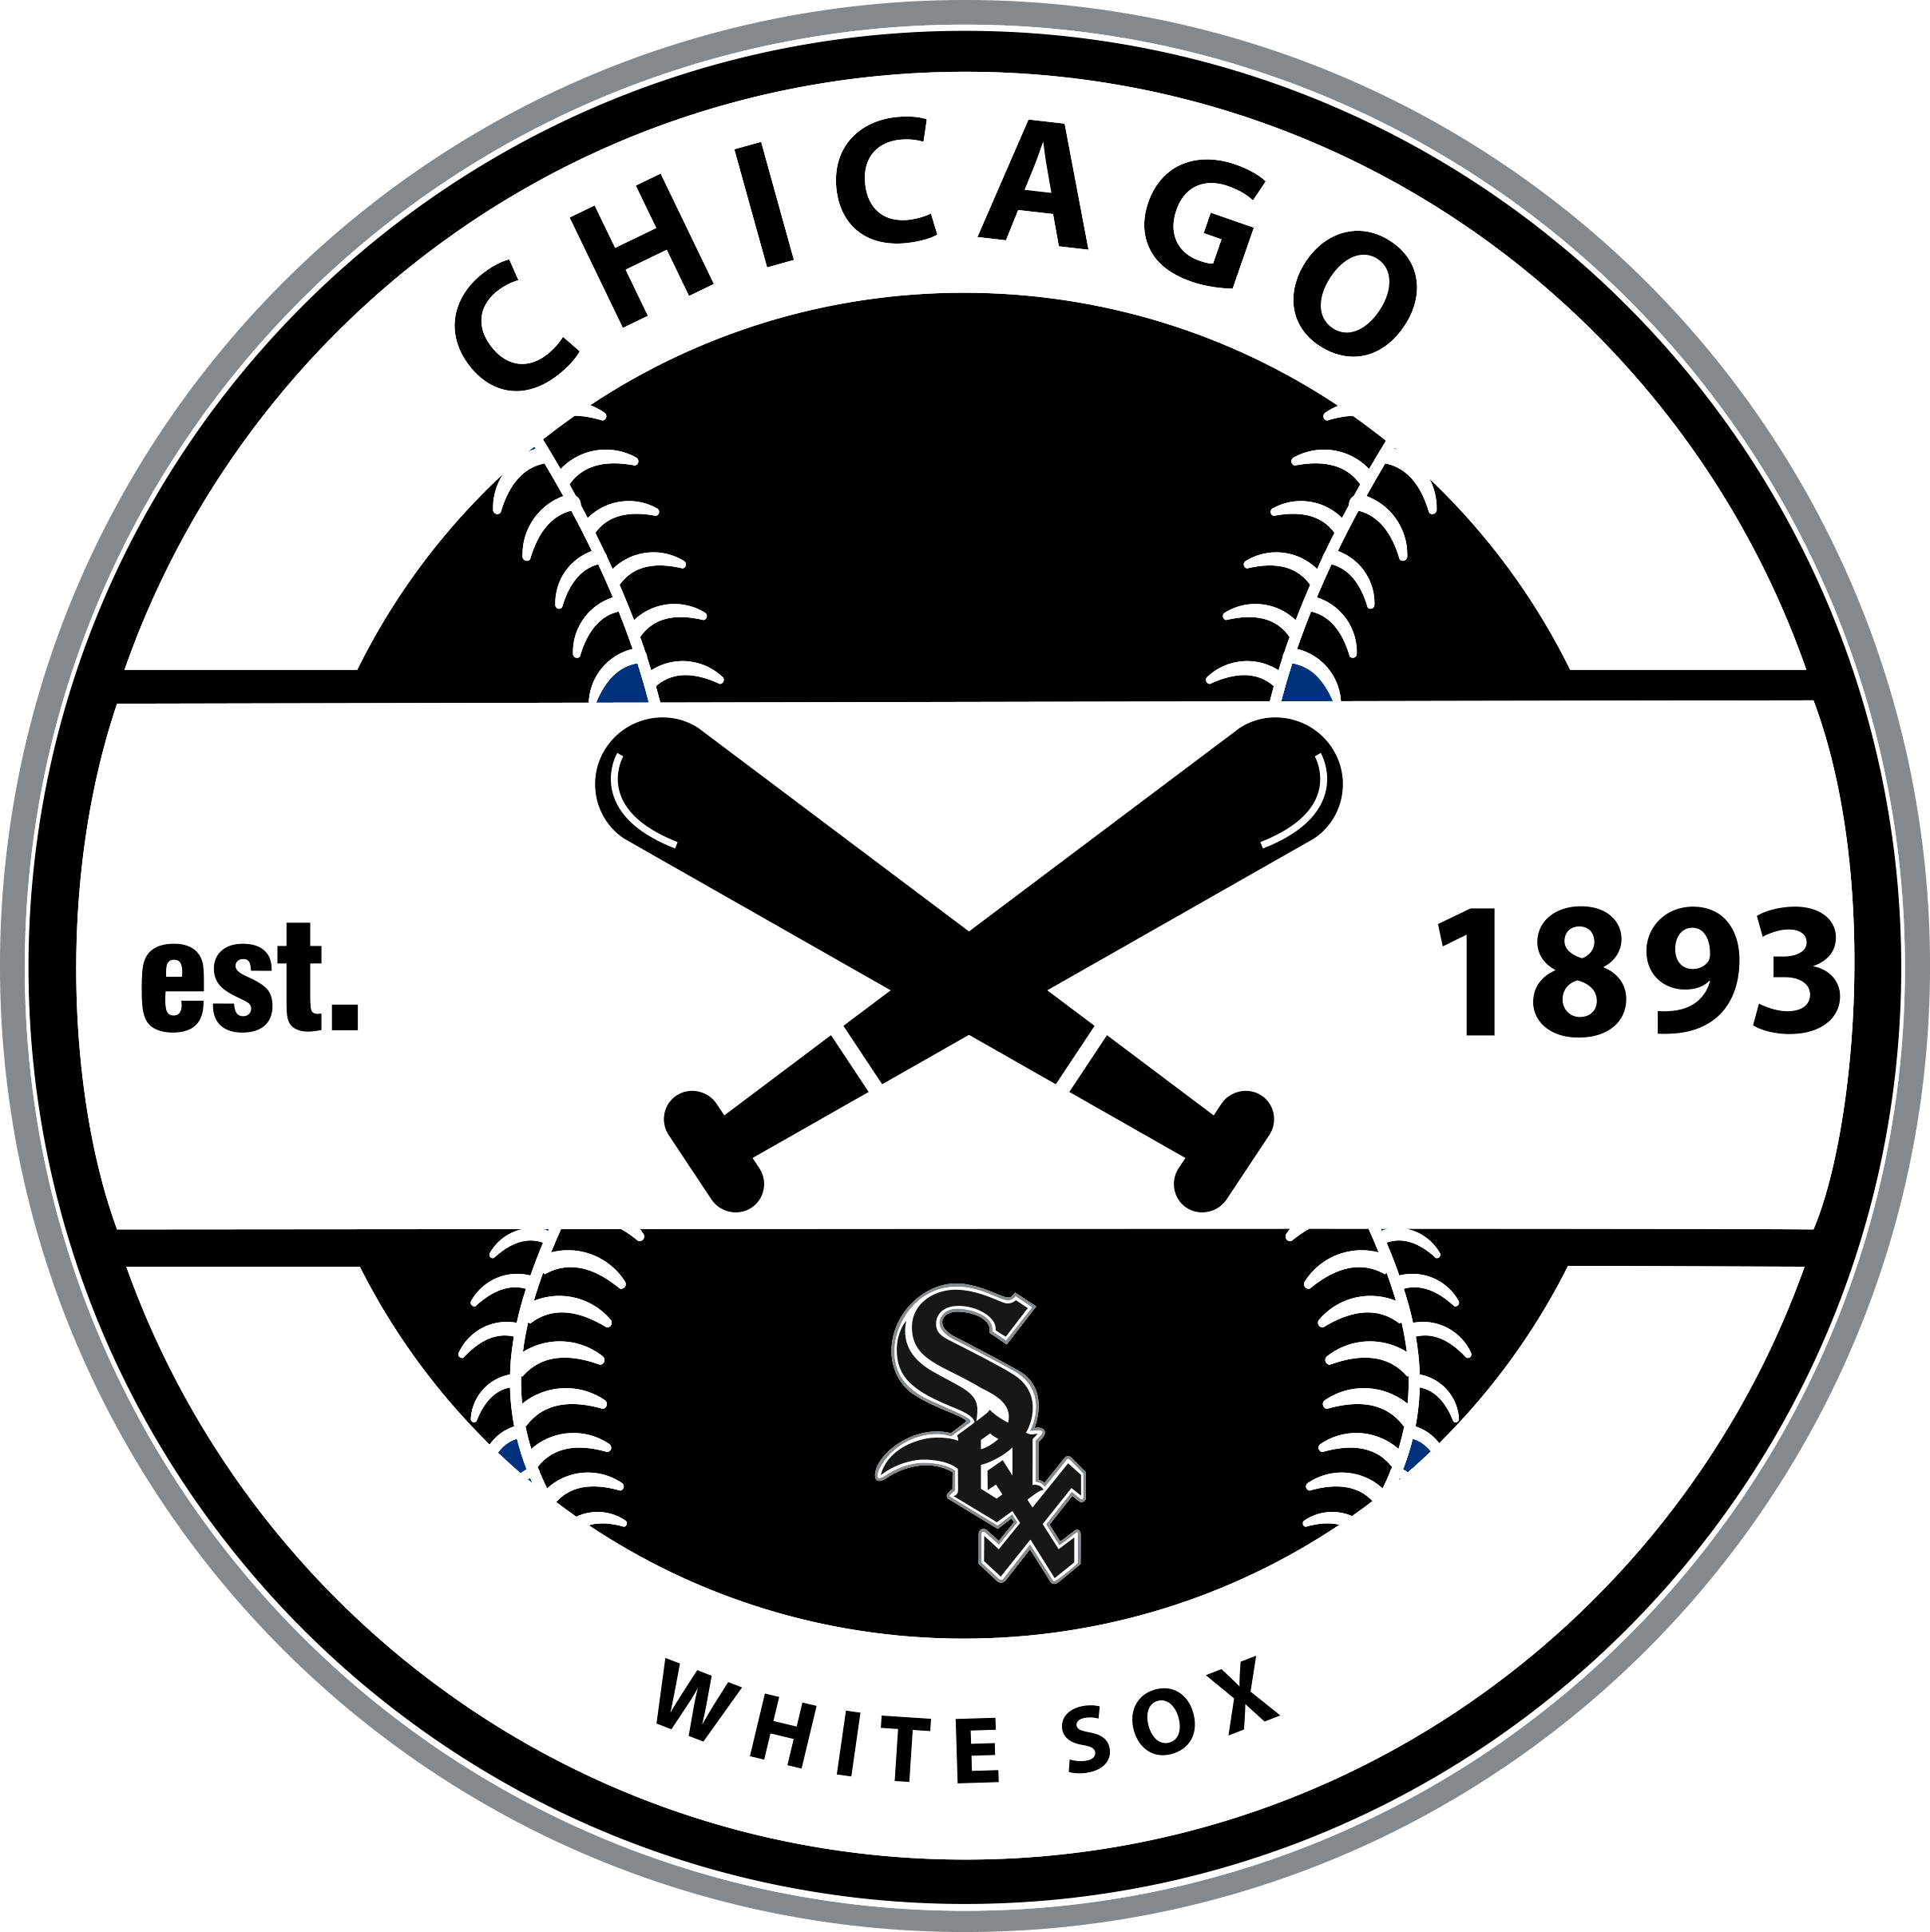 Retro Chicago White Sox SVG - Gravectory